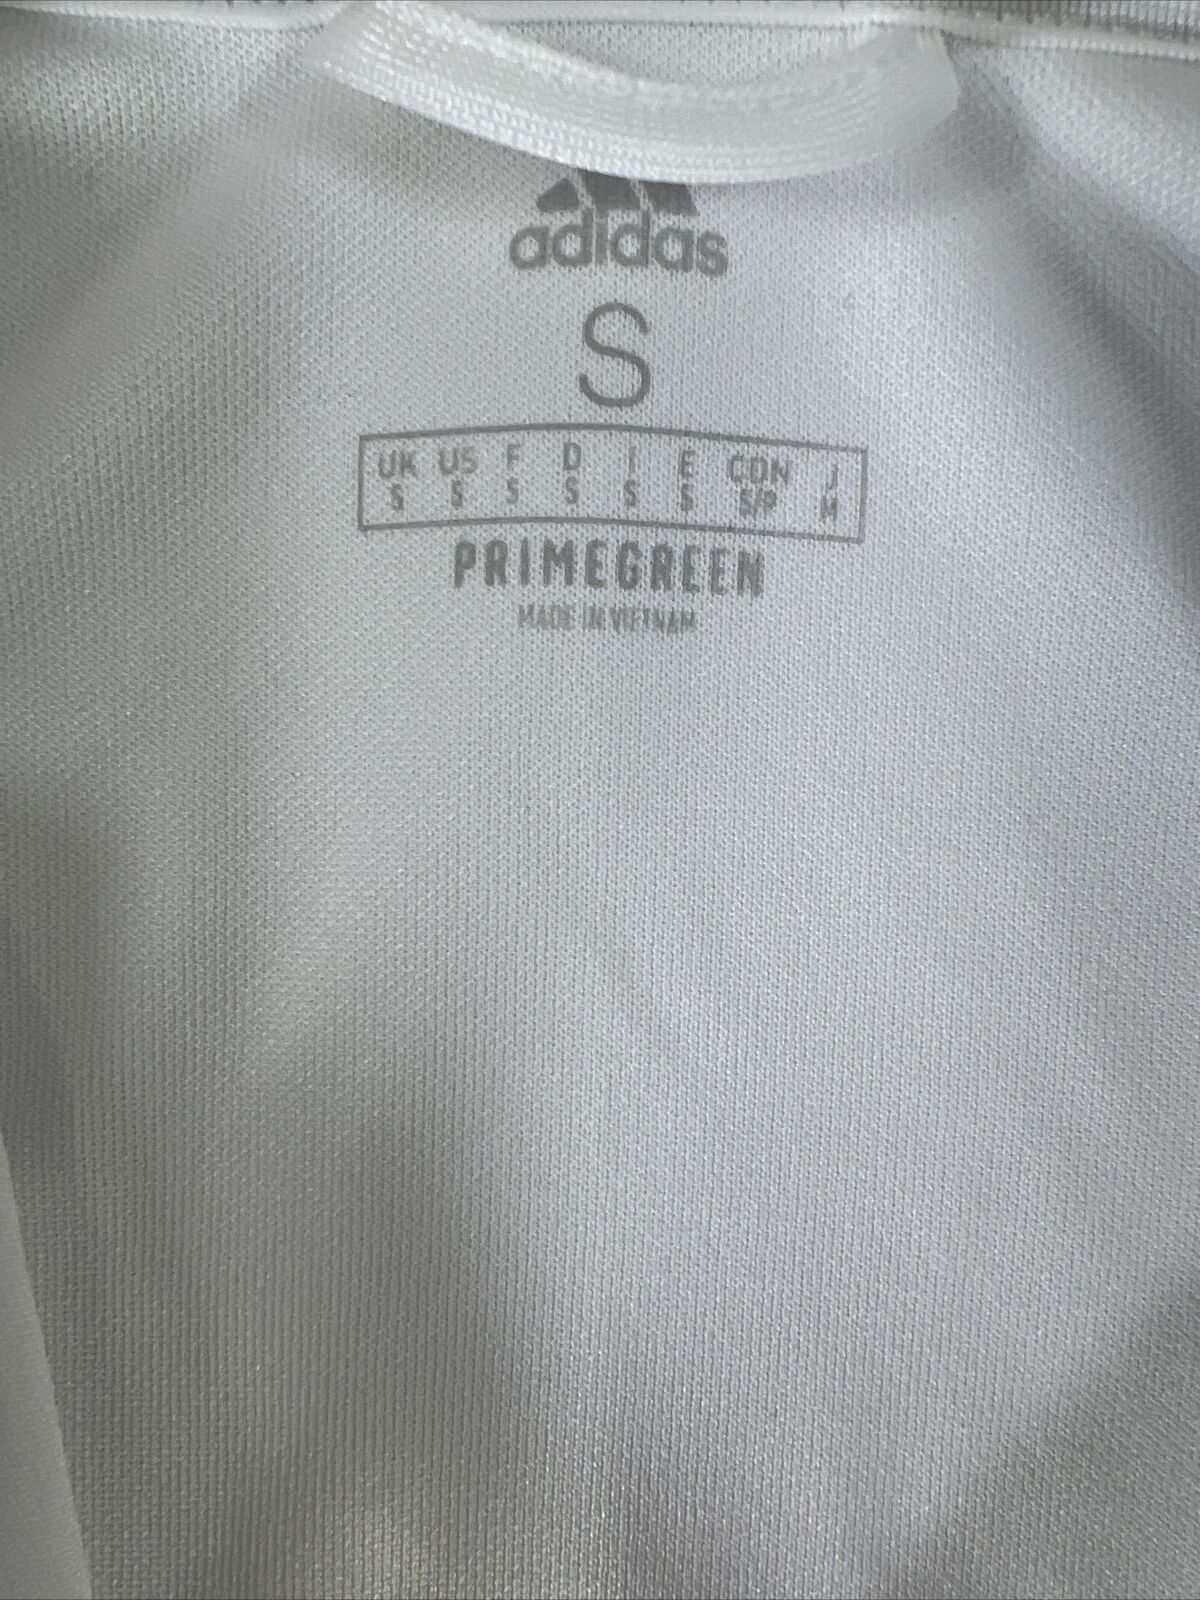 adidas Men's White Primagreen Full Zip Athletic Track Jacket - S